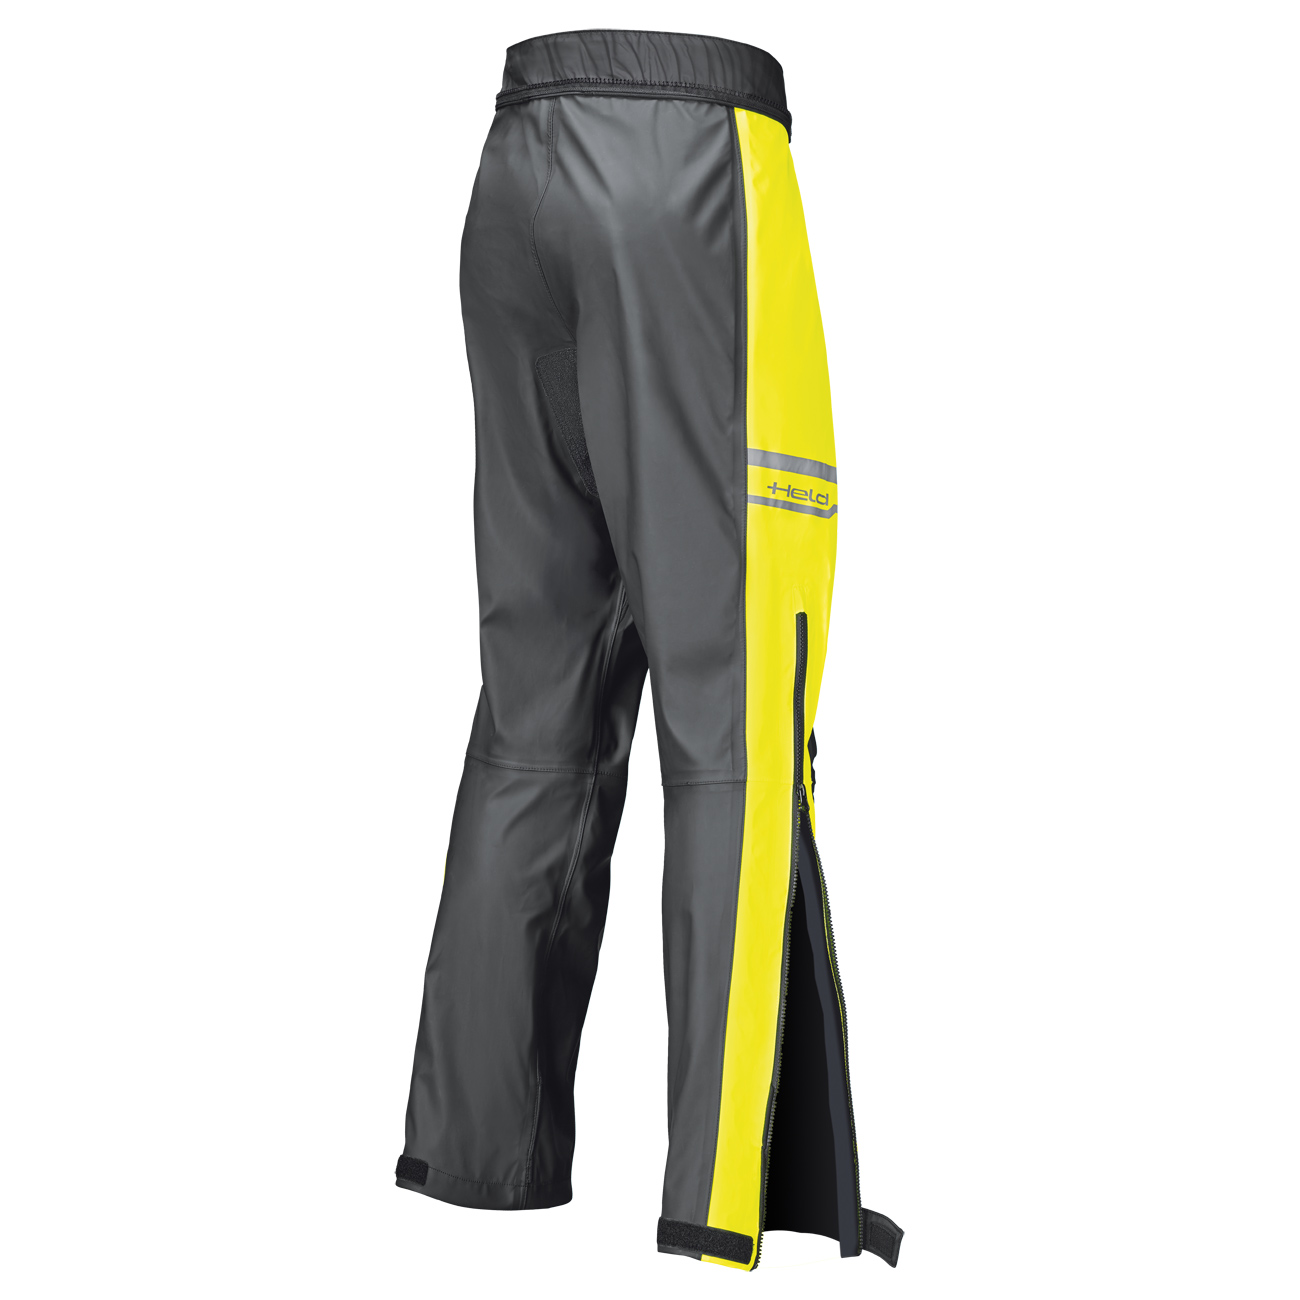 Rainstretch Base Waterproof over-pants